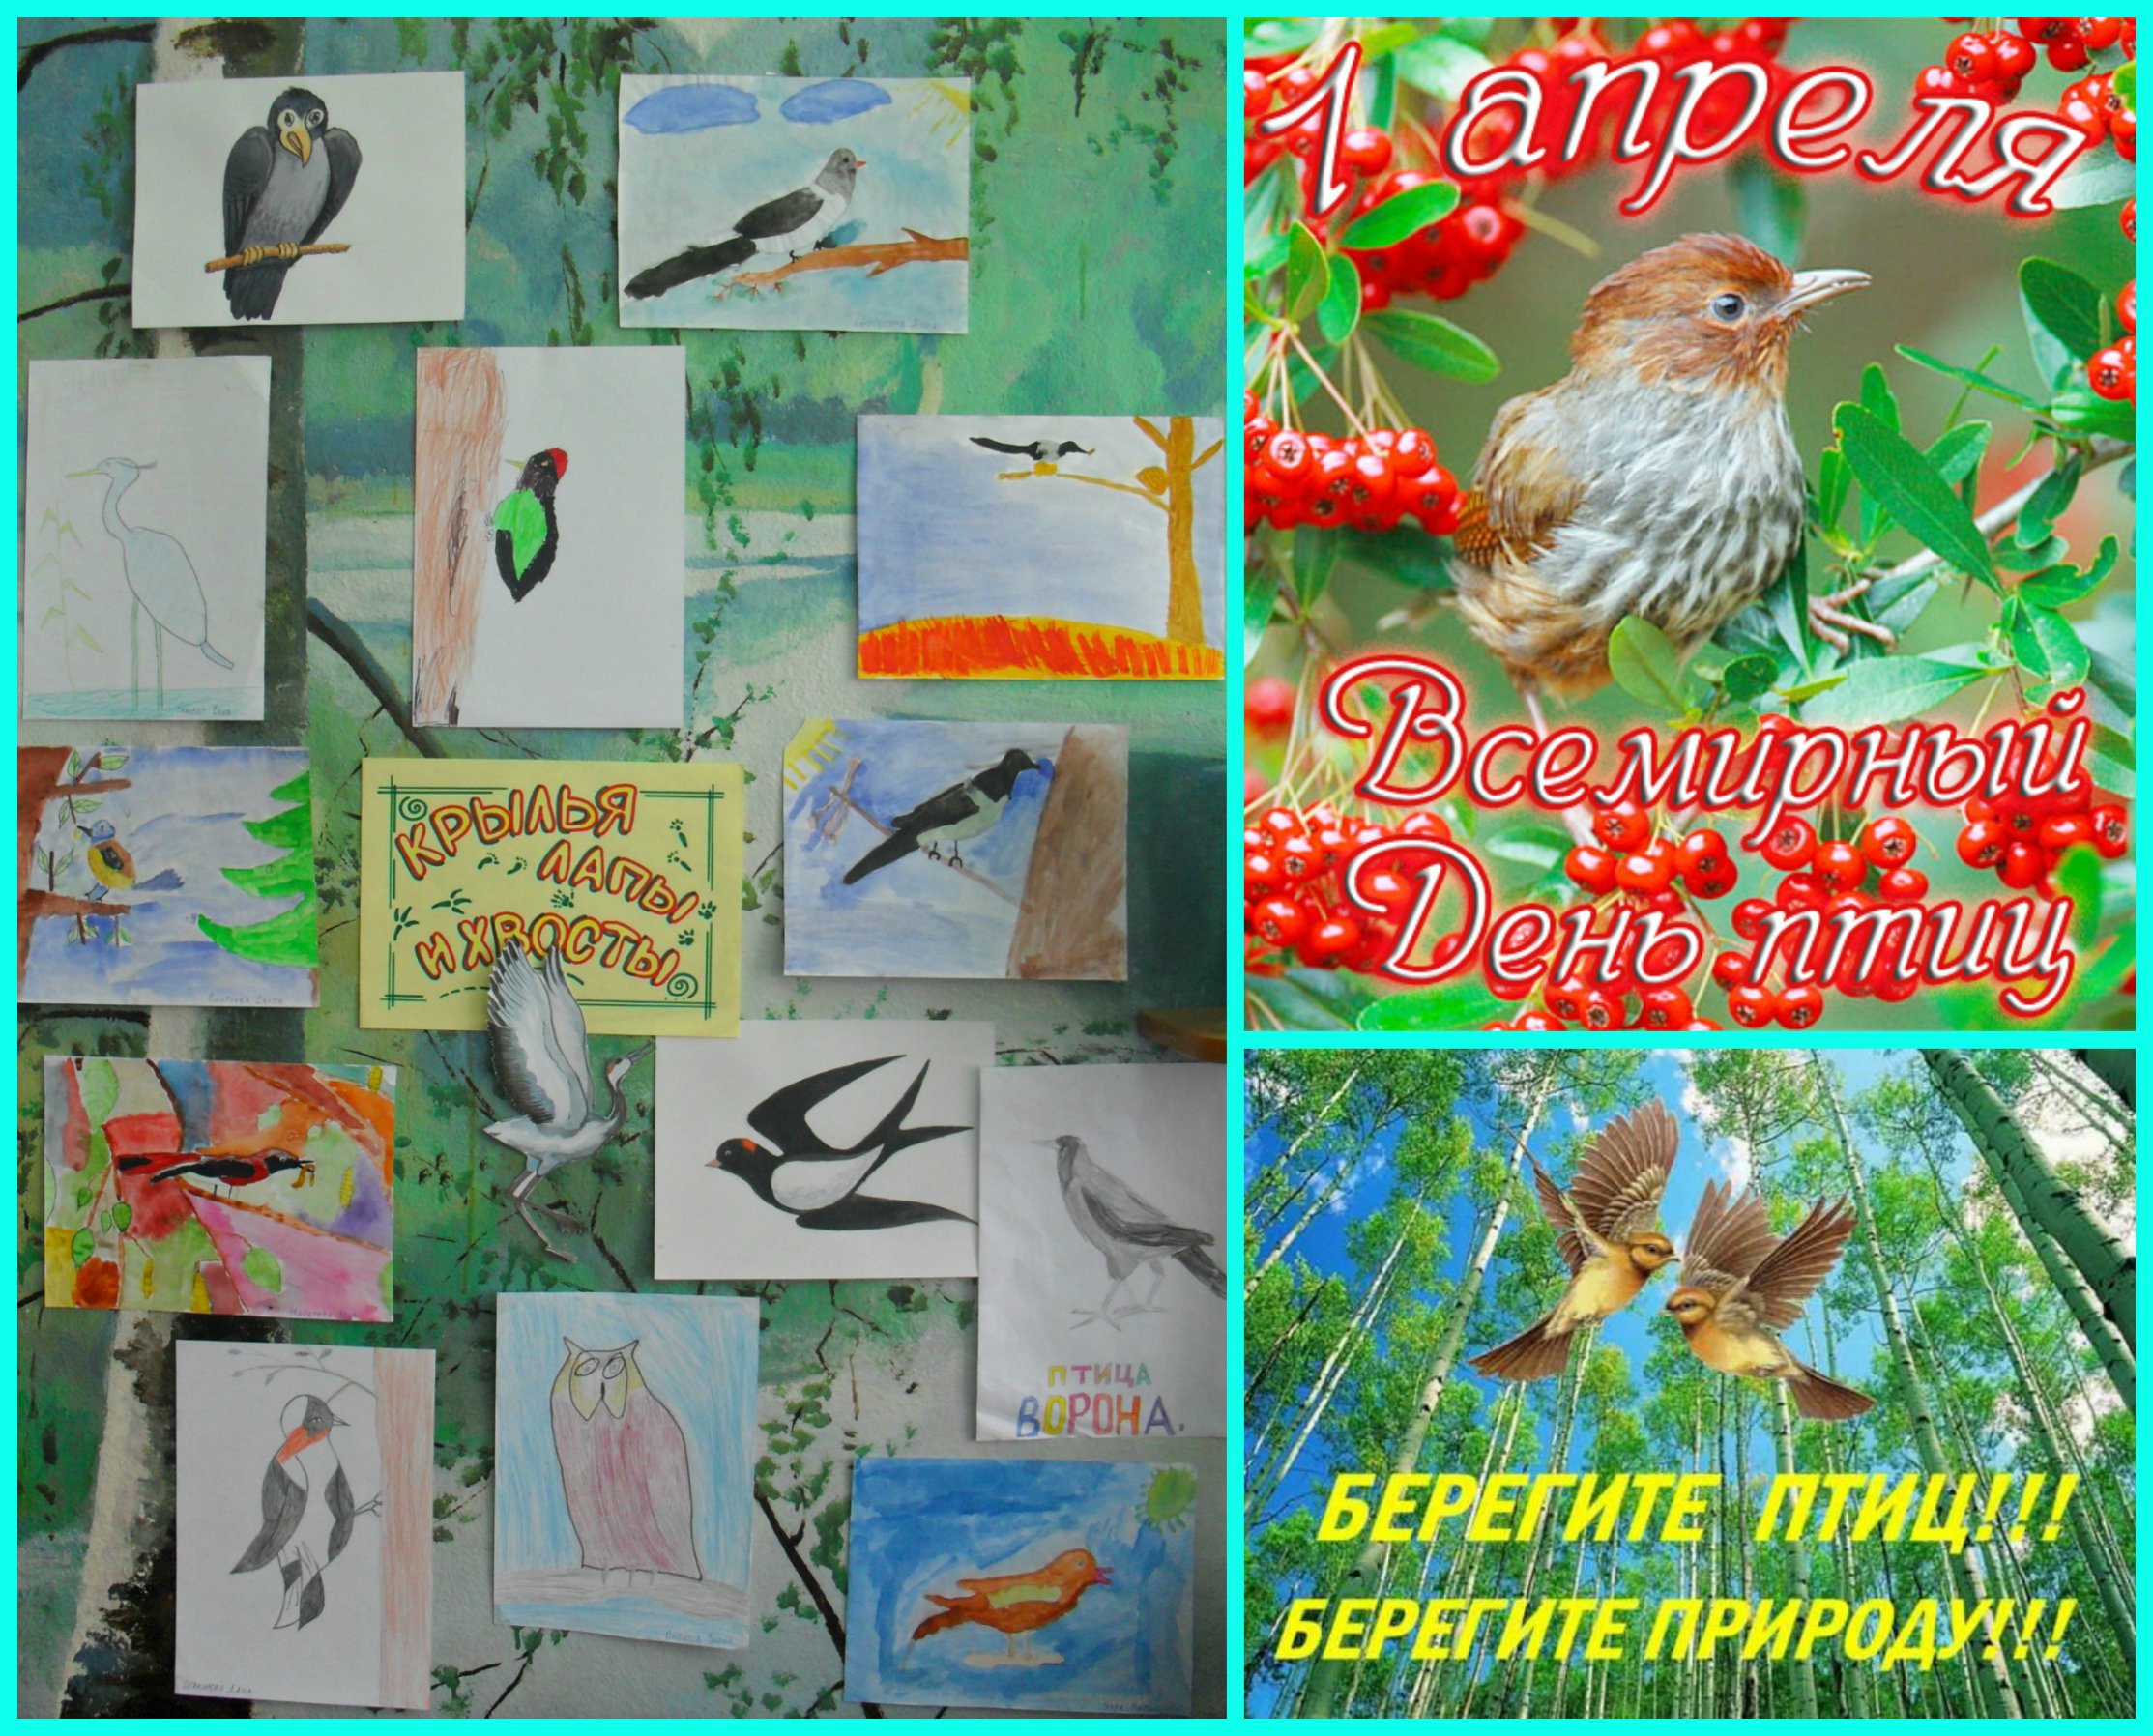 1 апреля международный день птиц картинки. 1 Апреля день птиц. Международный день птиц плакат. День птиц мероприятия. Международный день птиц мероприятия.